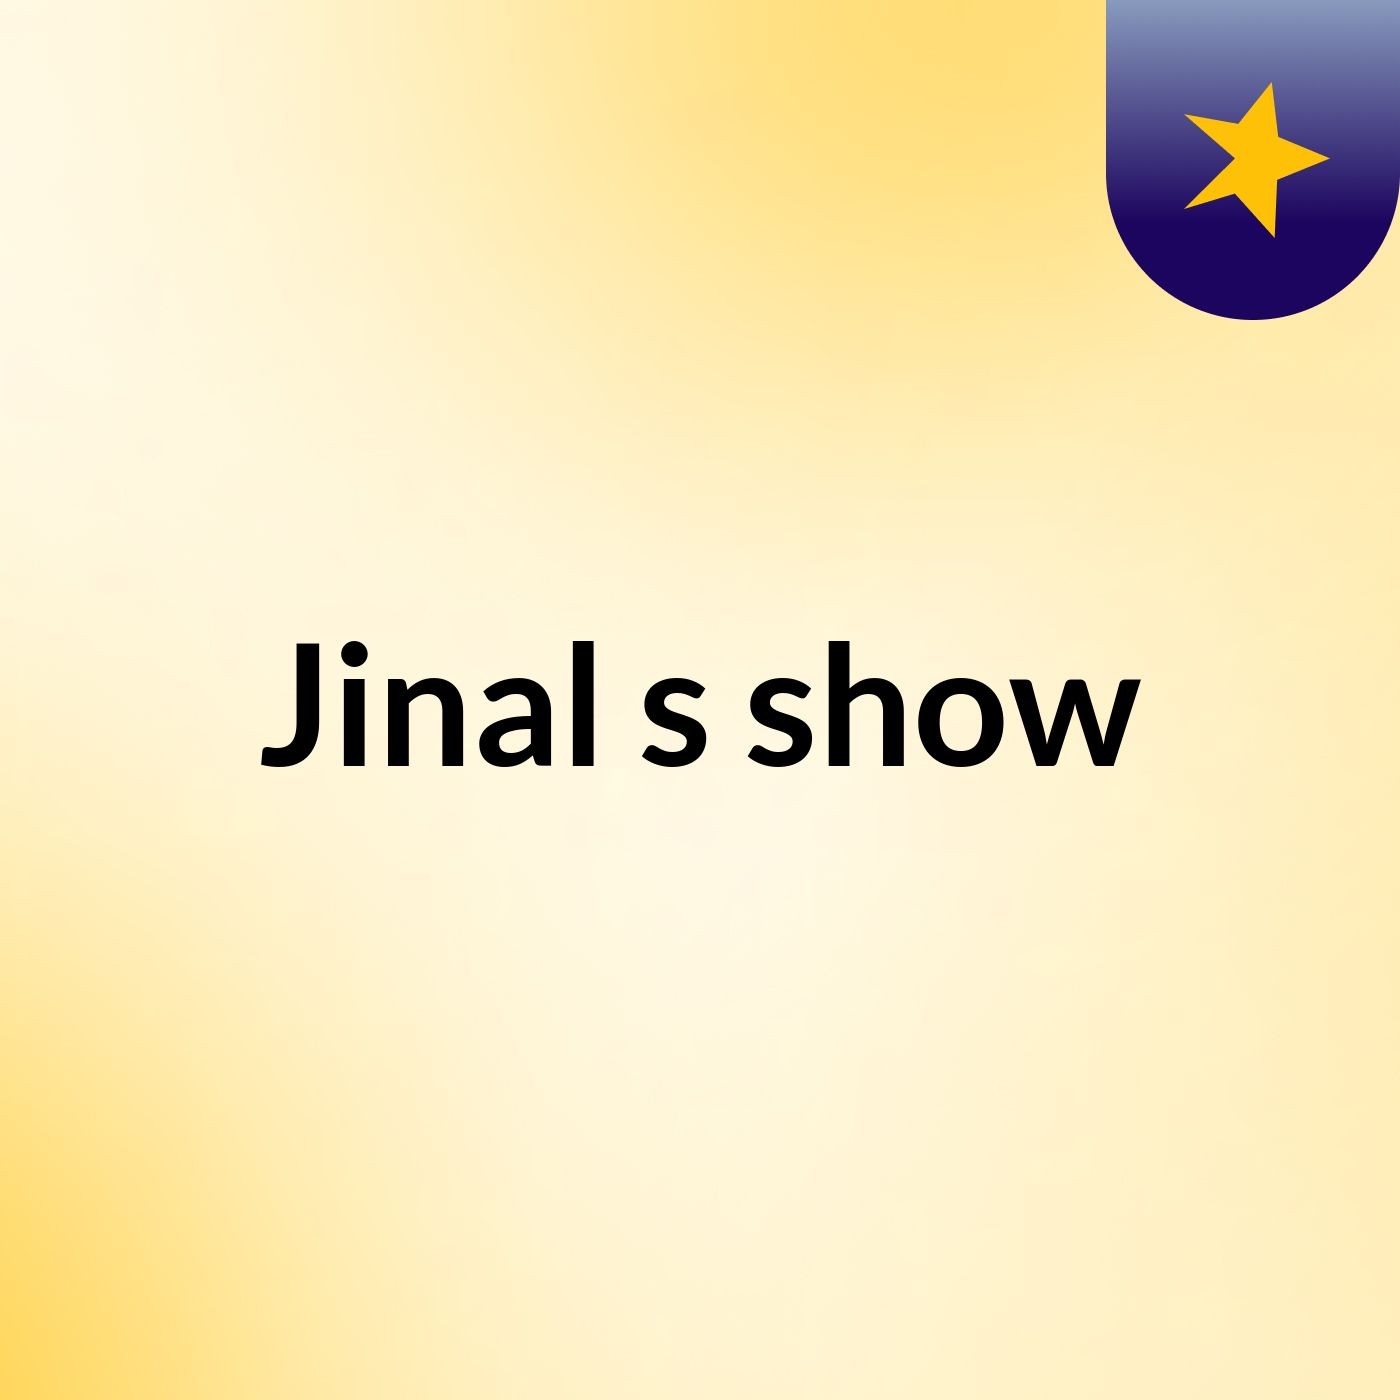 Jinal's show